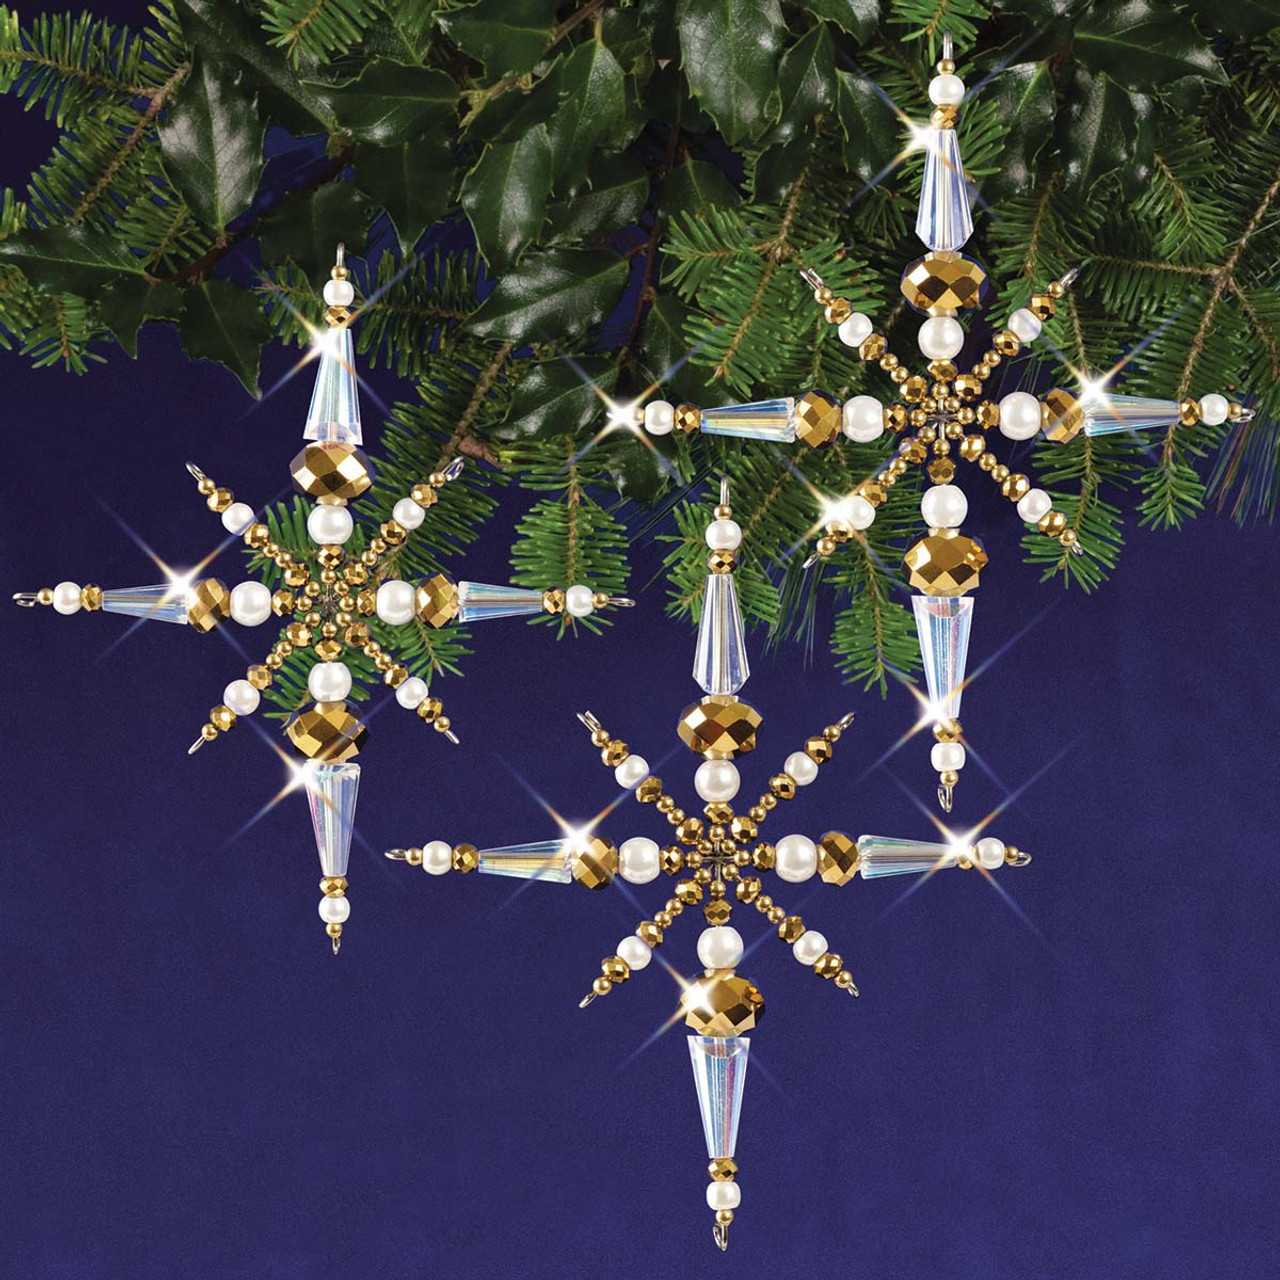 Herrschners Christmas Vibes Ornament Kit